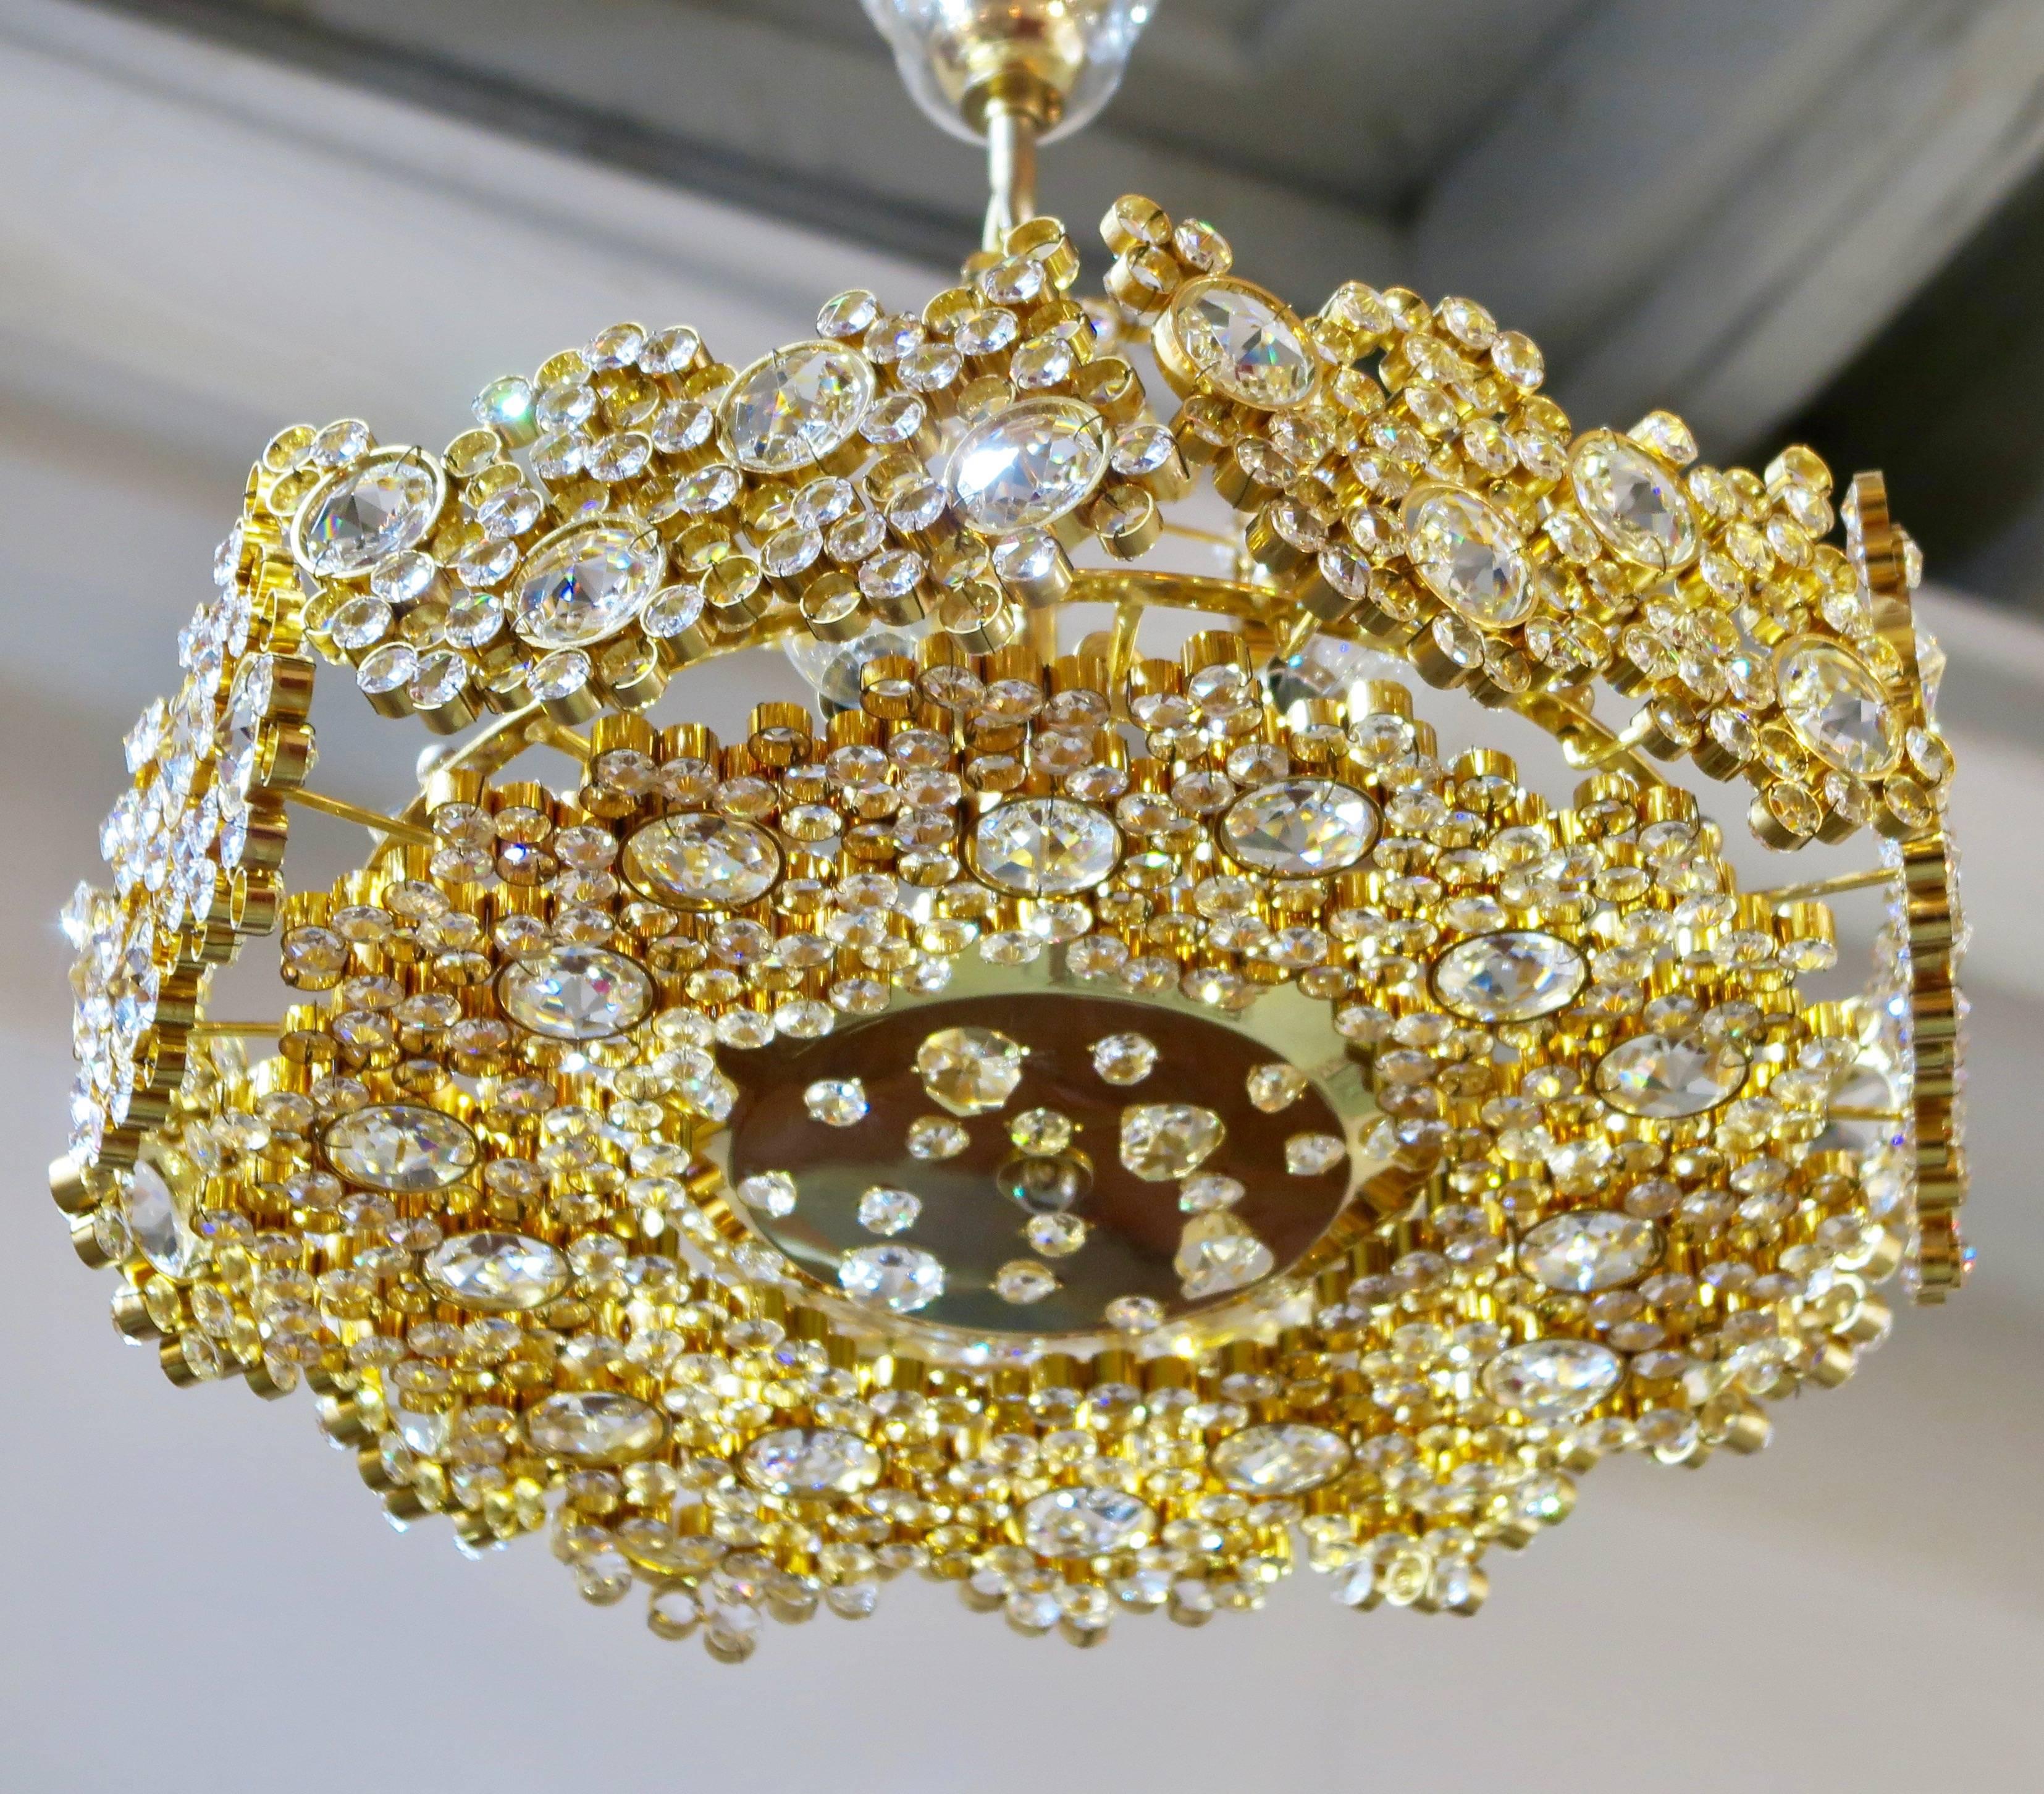 Mid-Century Modern Jewel like Chandelier with Hundreds of Crystals (Moderne der Mitte des Jahrhunderts) im Angebot